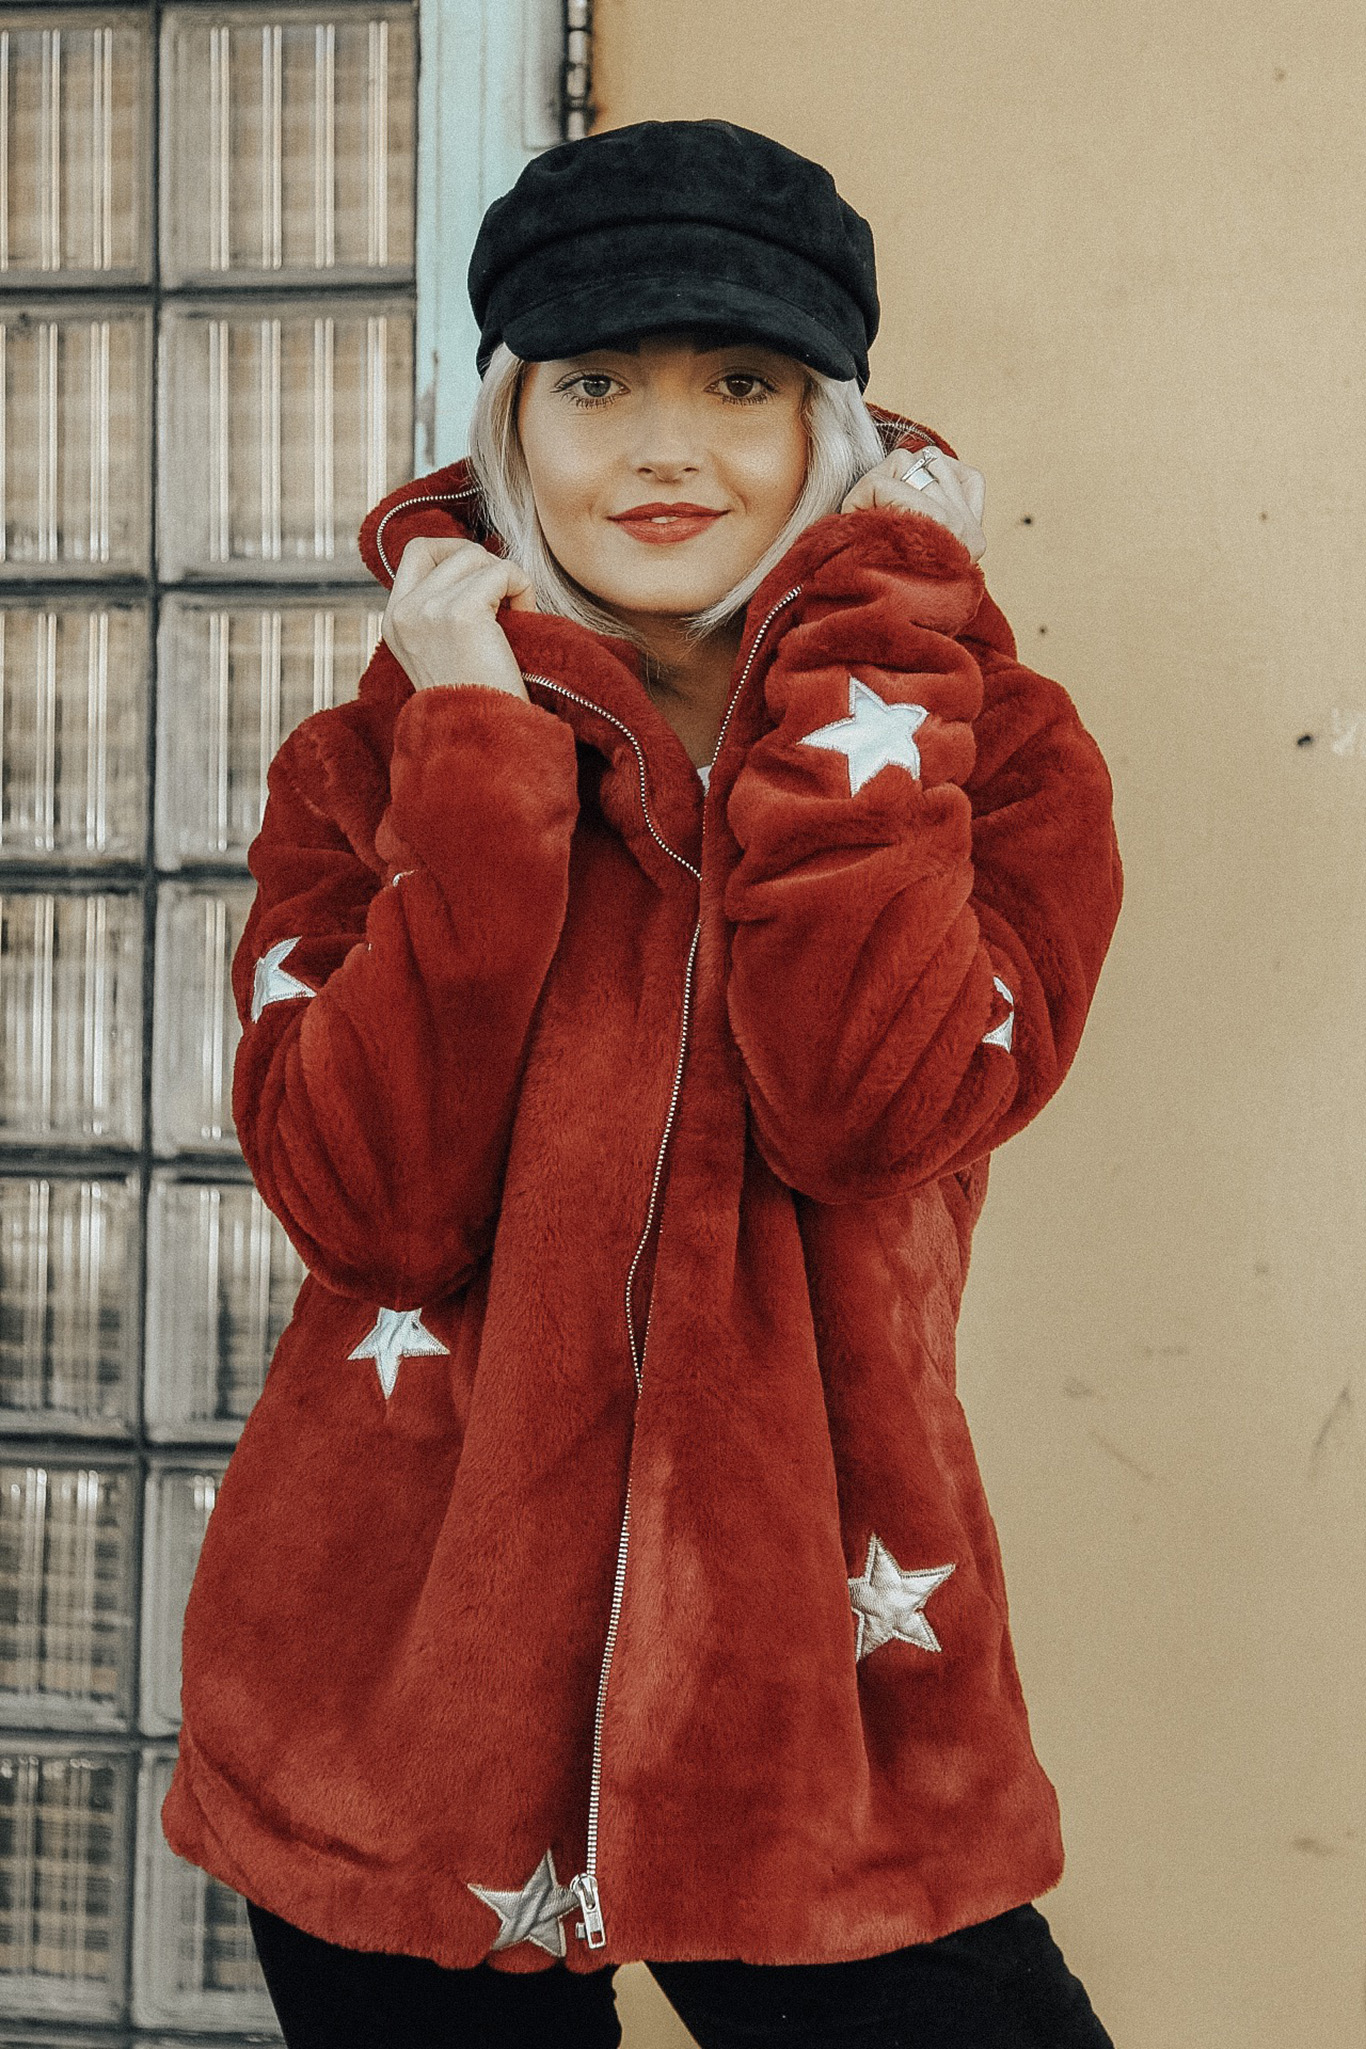 Alena Gidenko of modaprints.com shares her favorite cozy star coat